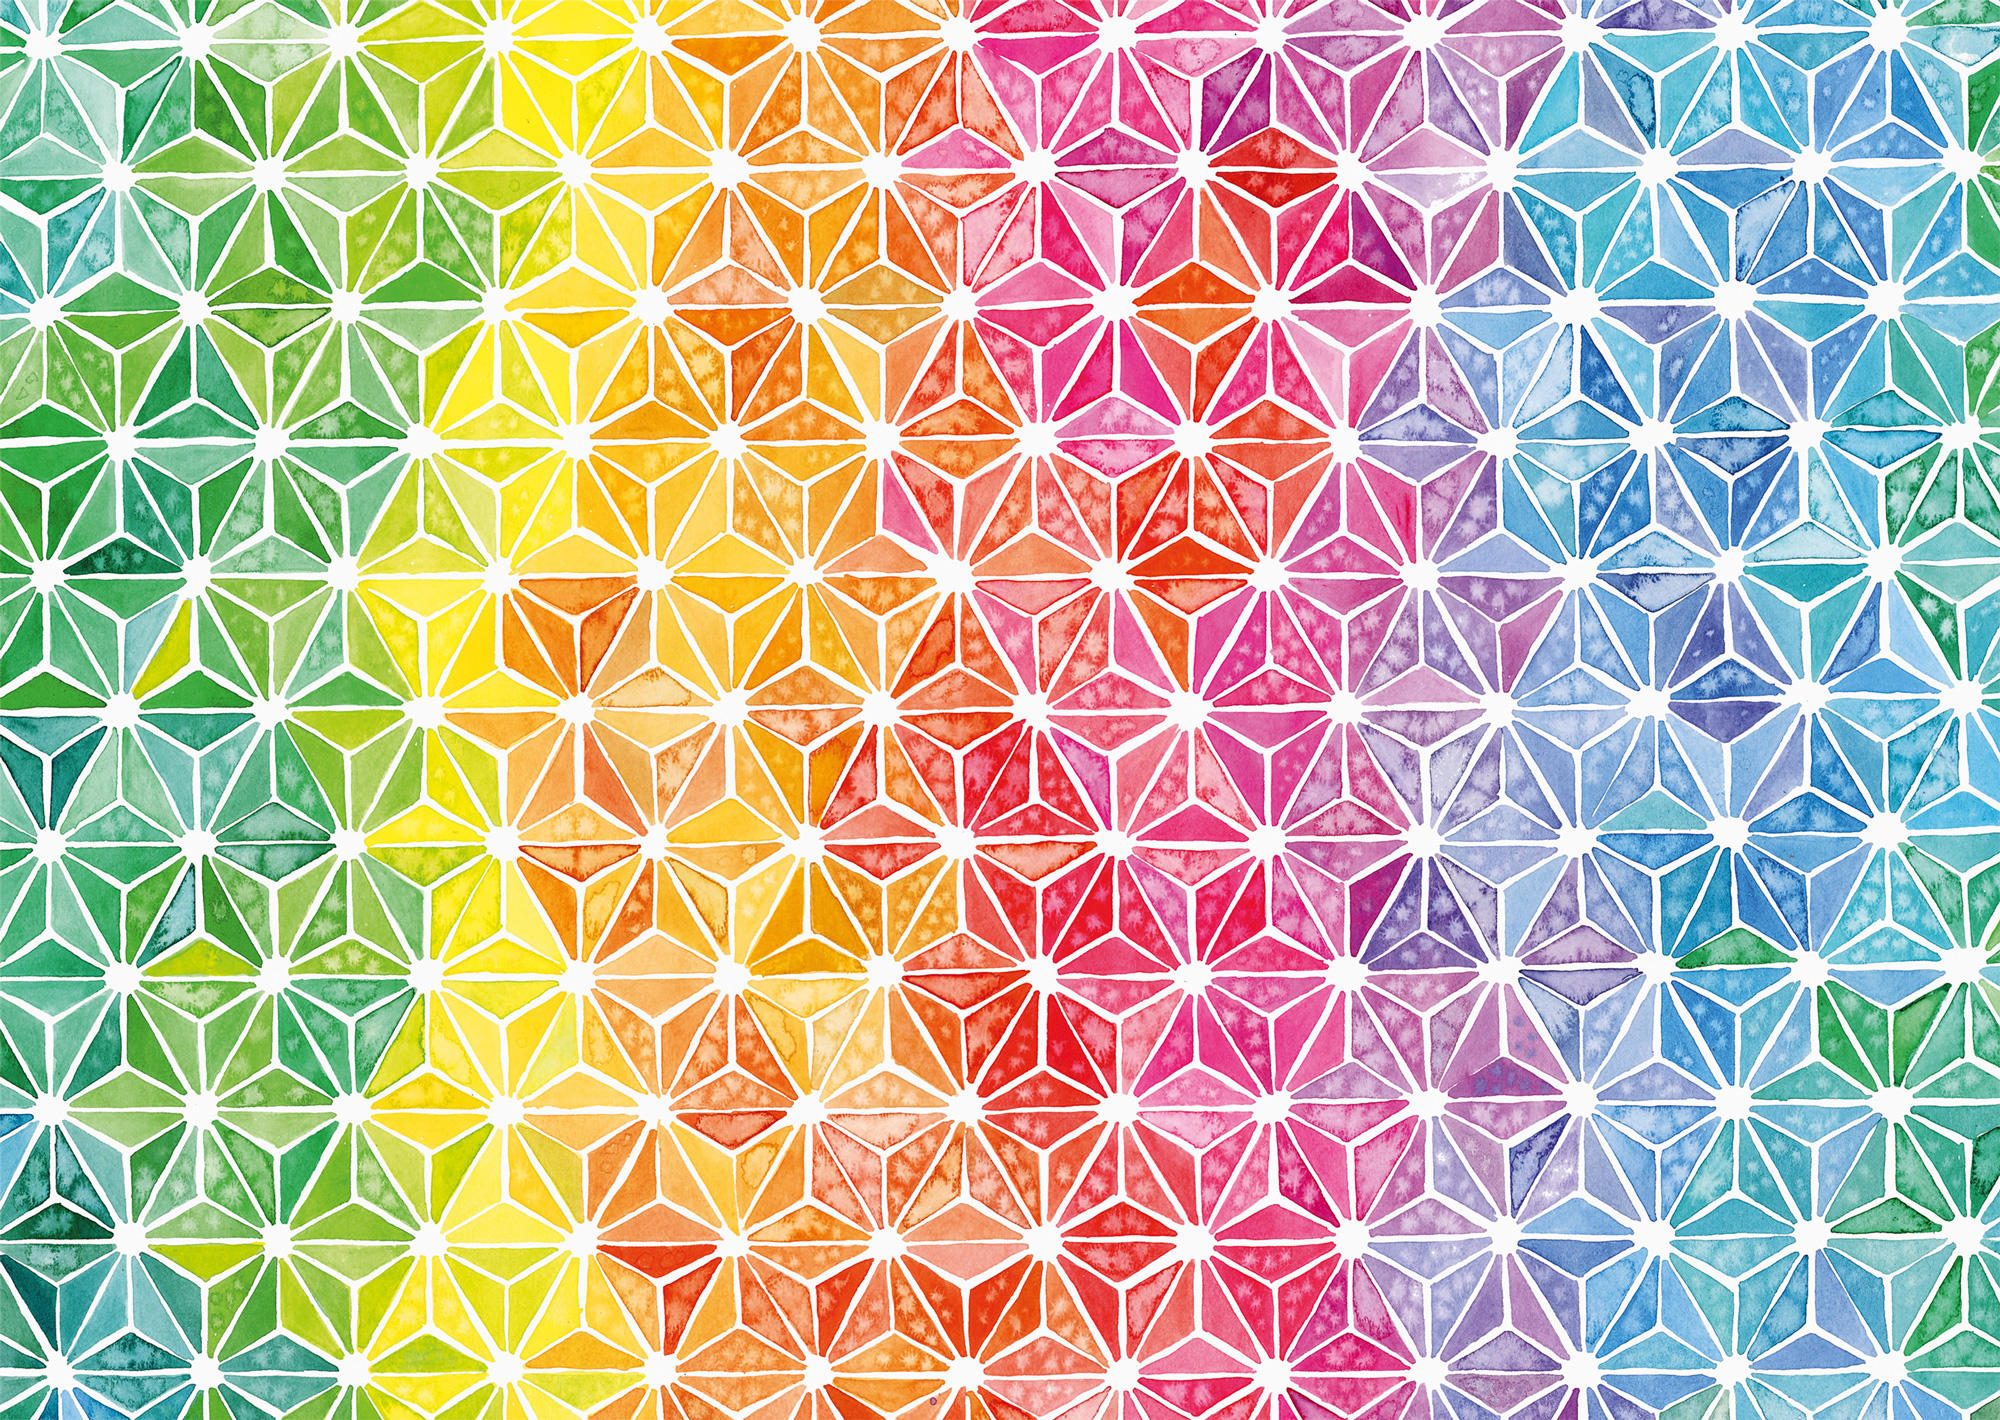 Josie Lewis: Colourful triangles